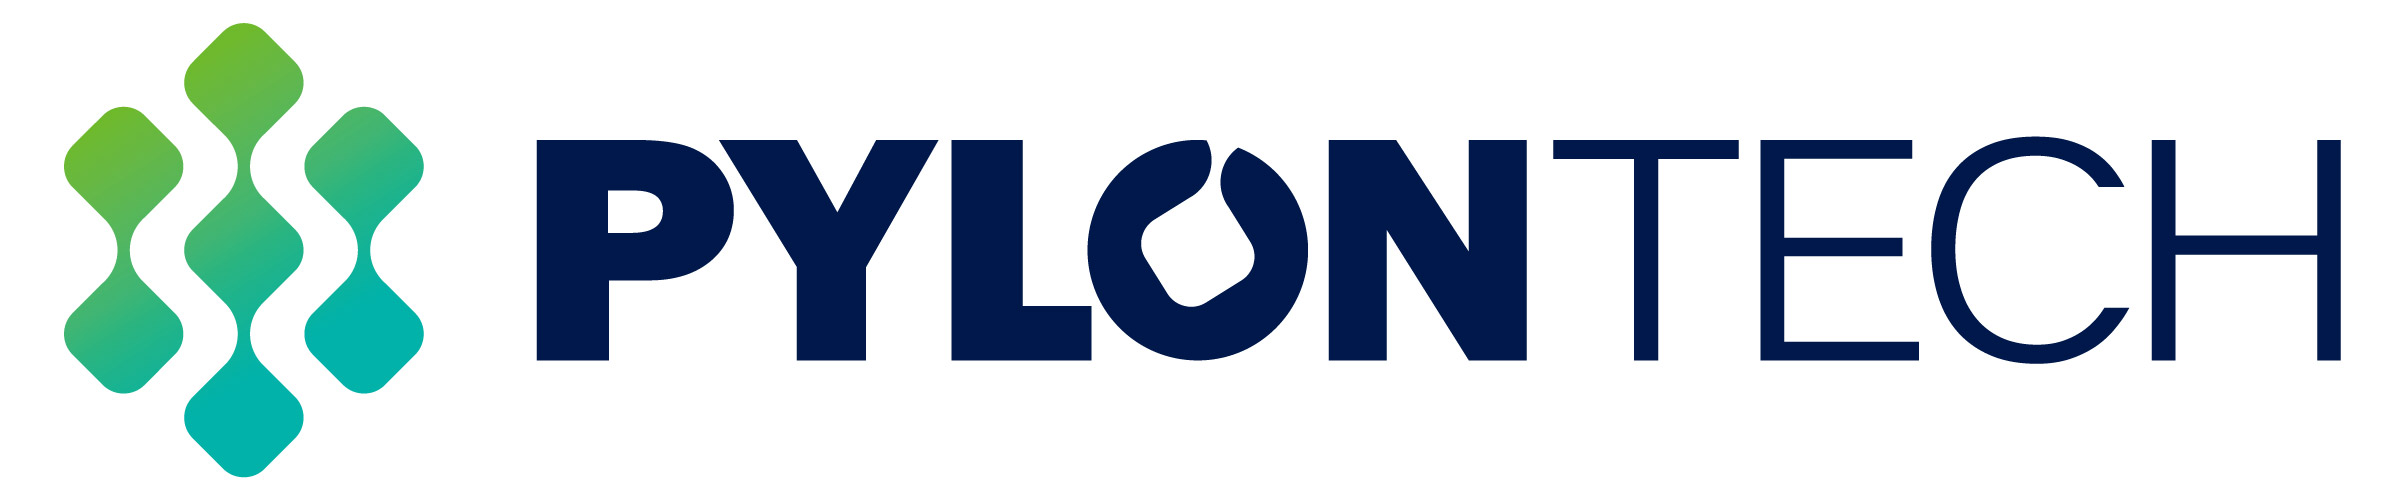 pylontech-logo